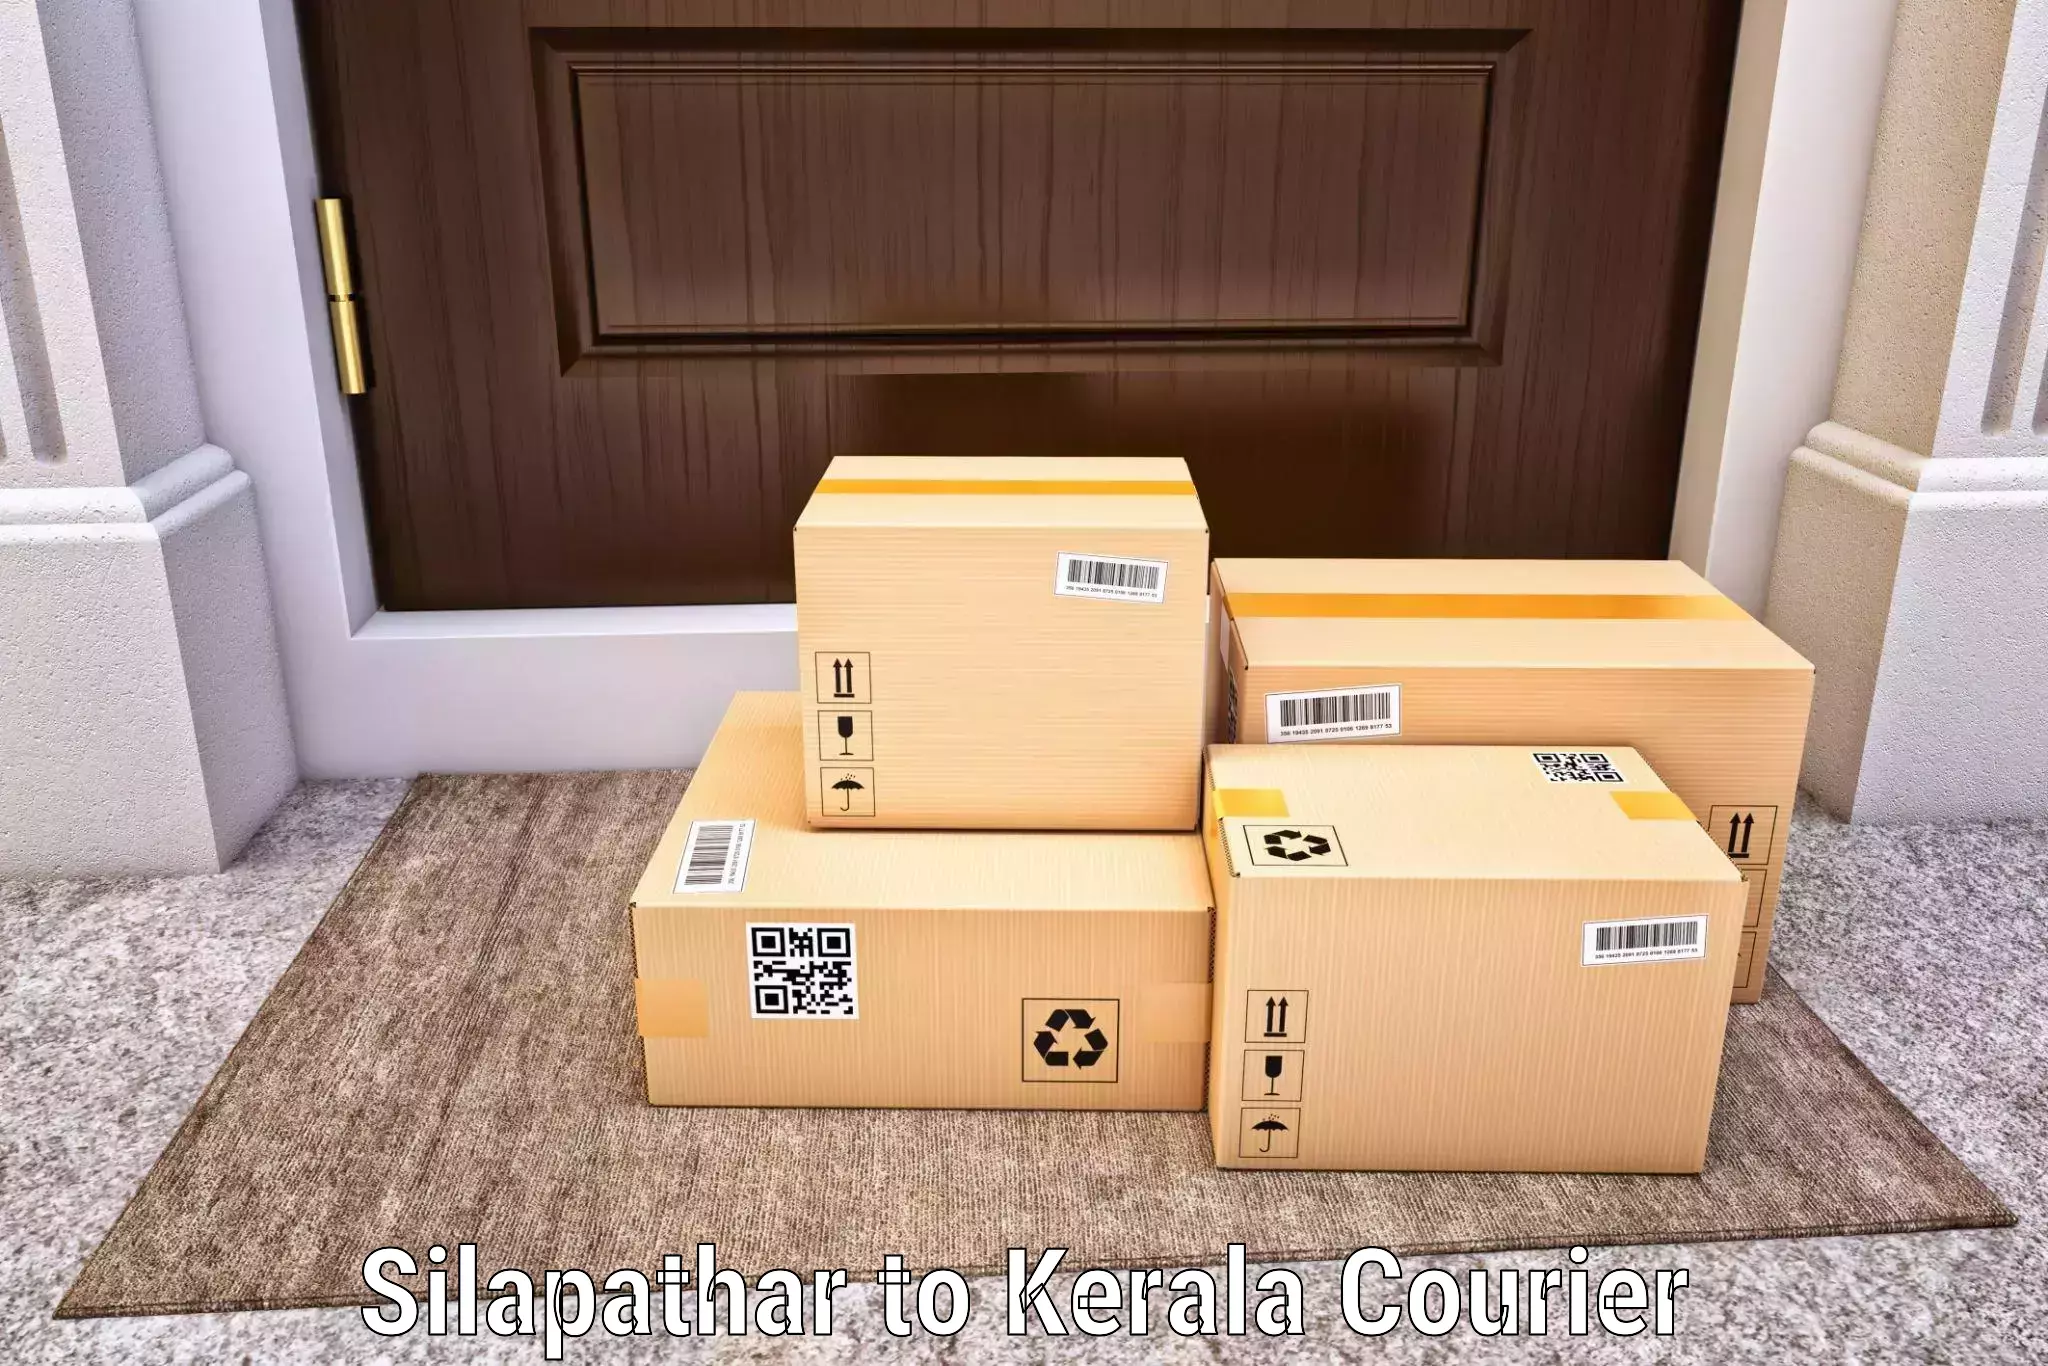 Express logistics providers Silapathar to Agali